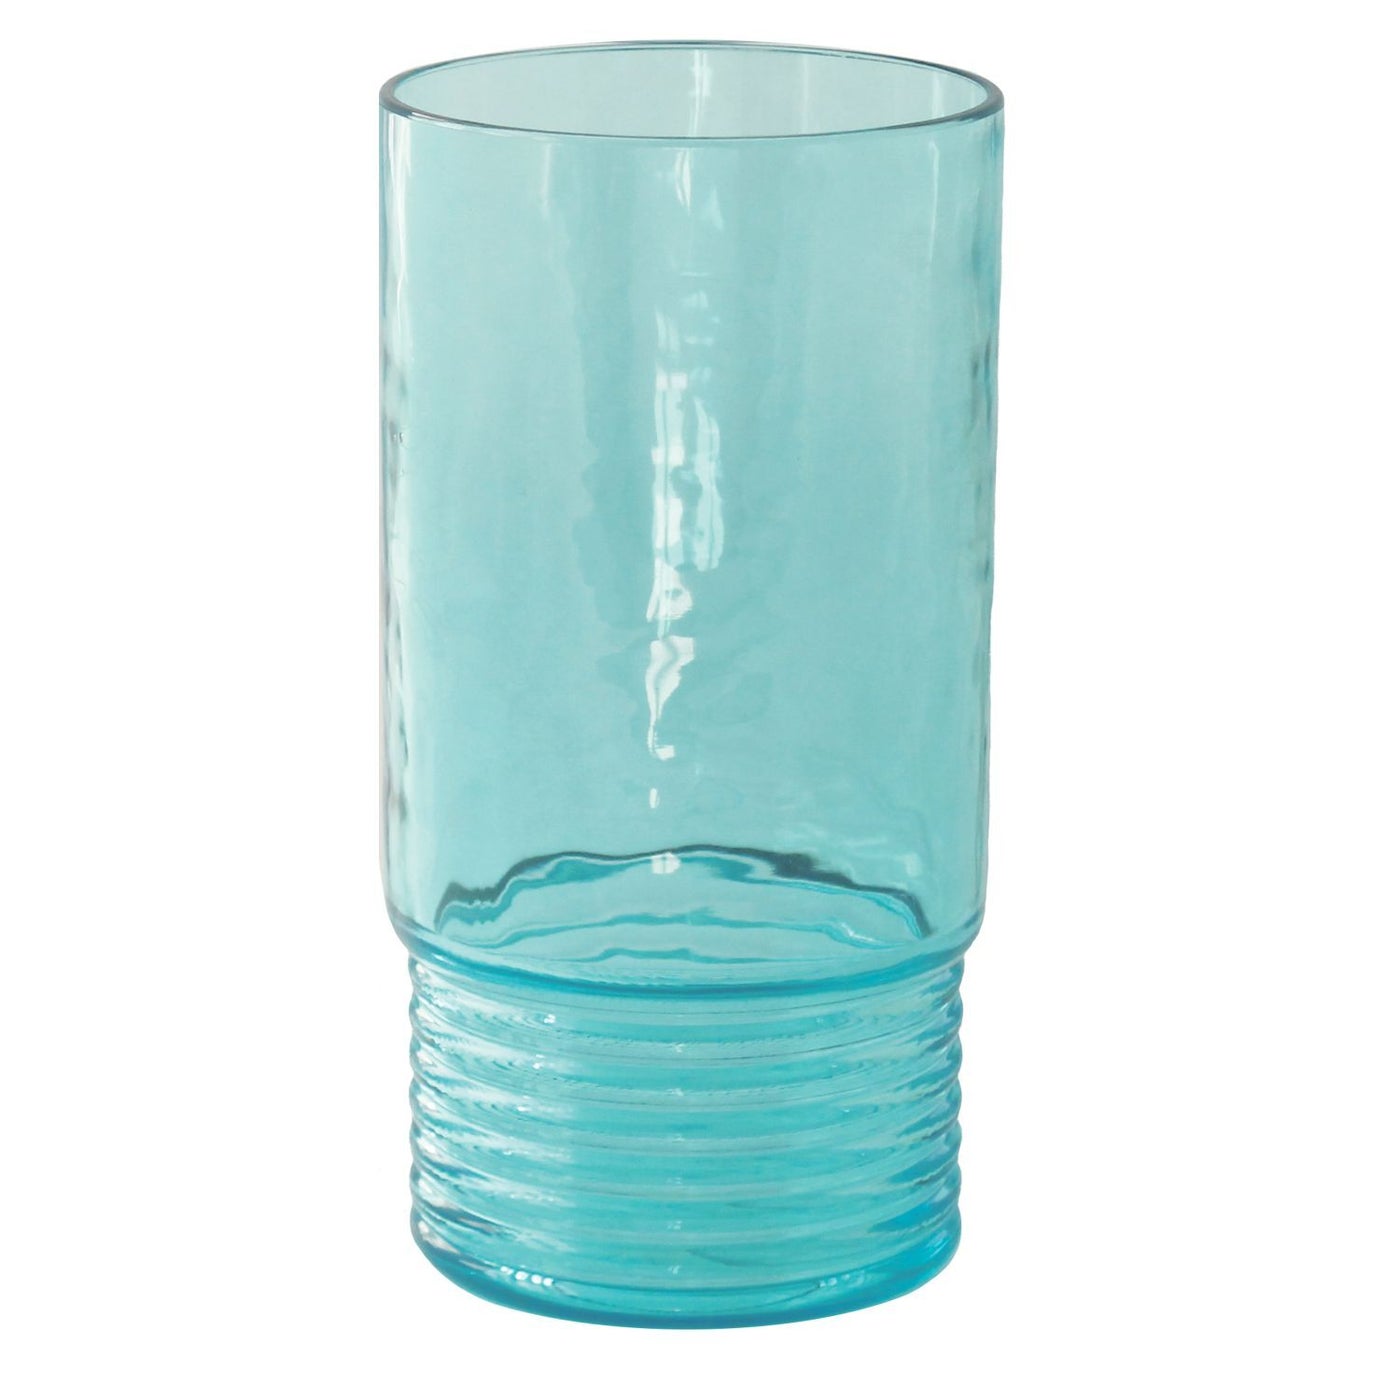 Santorini Tumbler Glass, Acrylic, set of 4